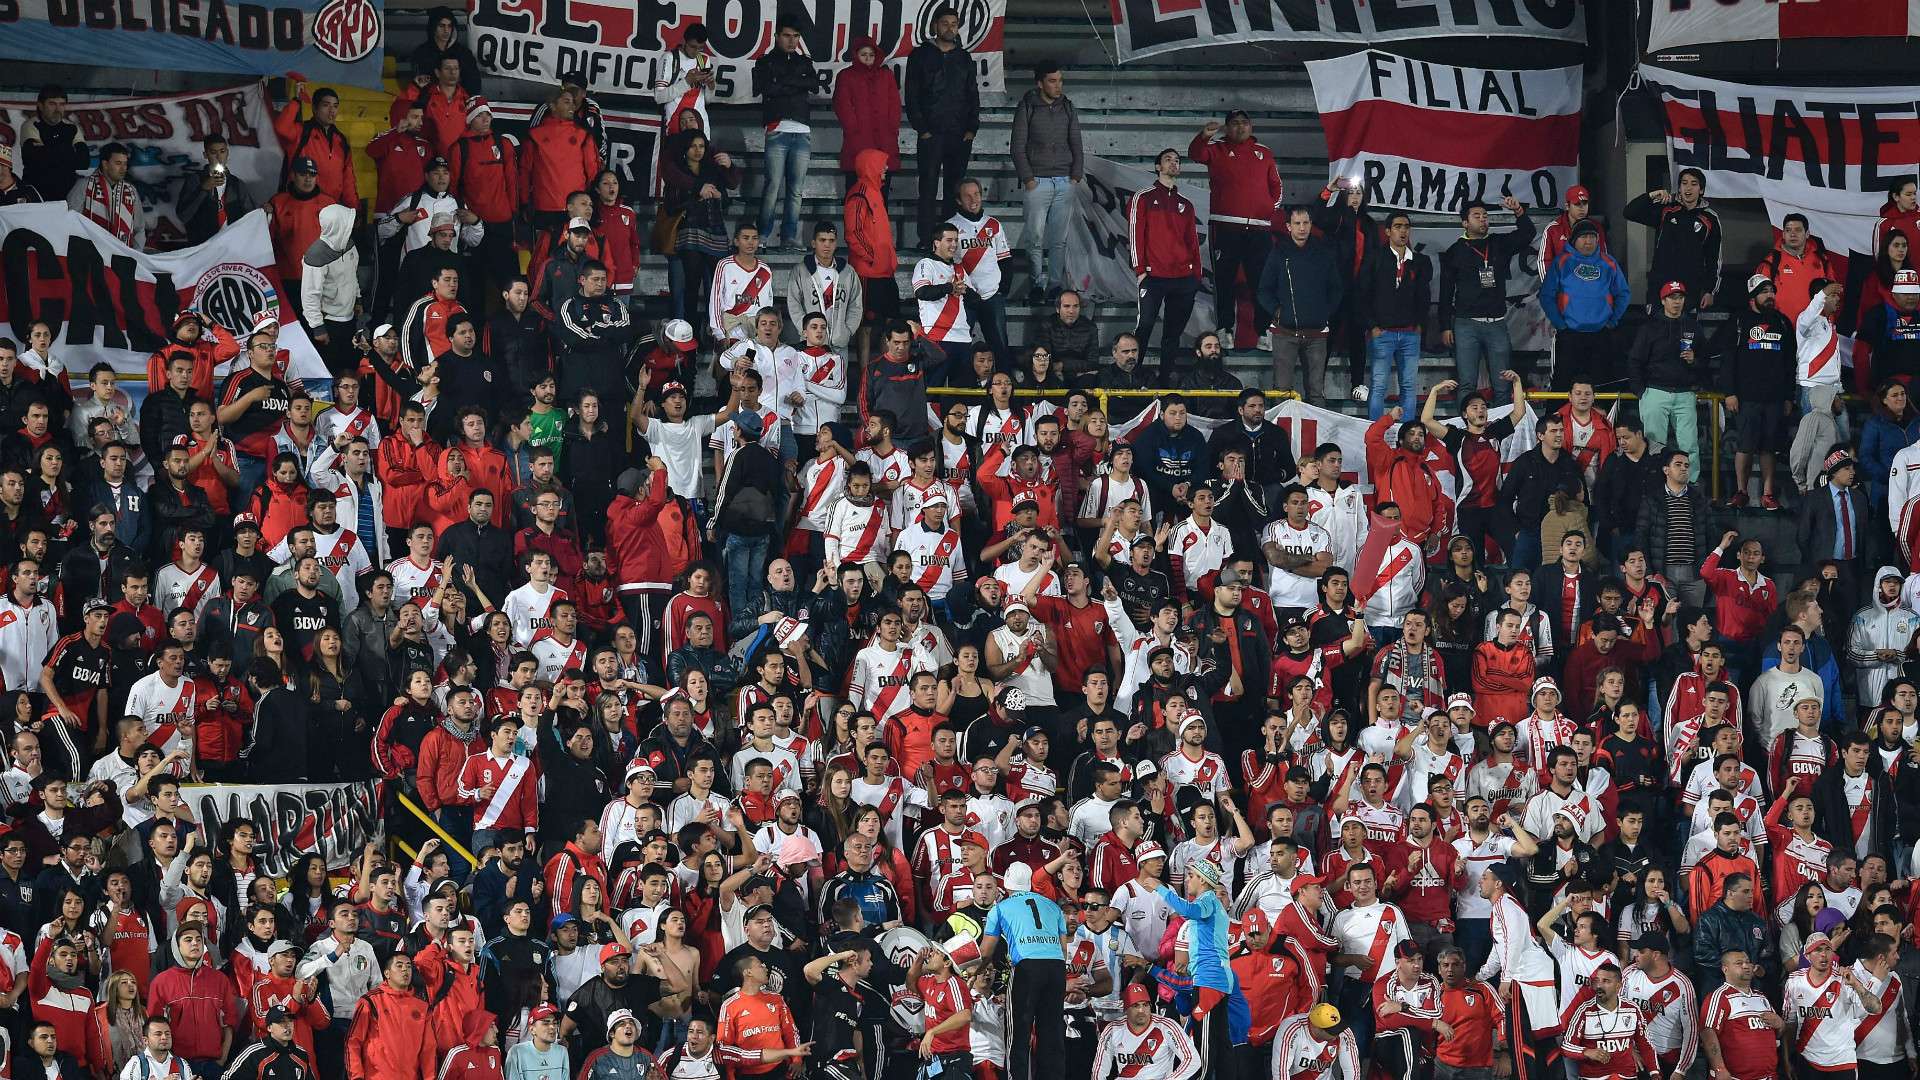 HD River Plate fans